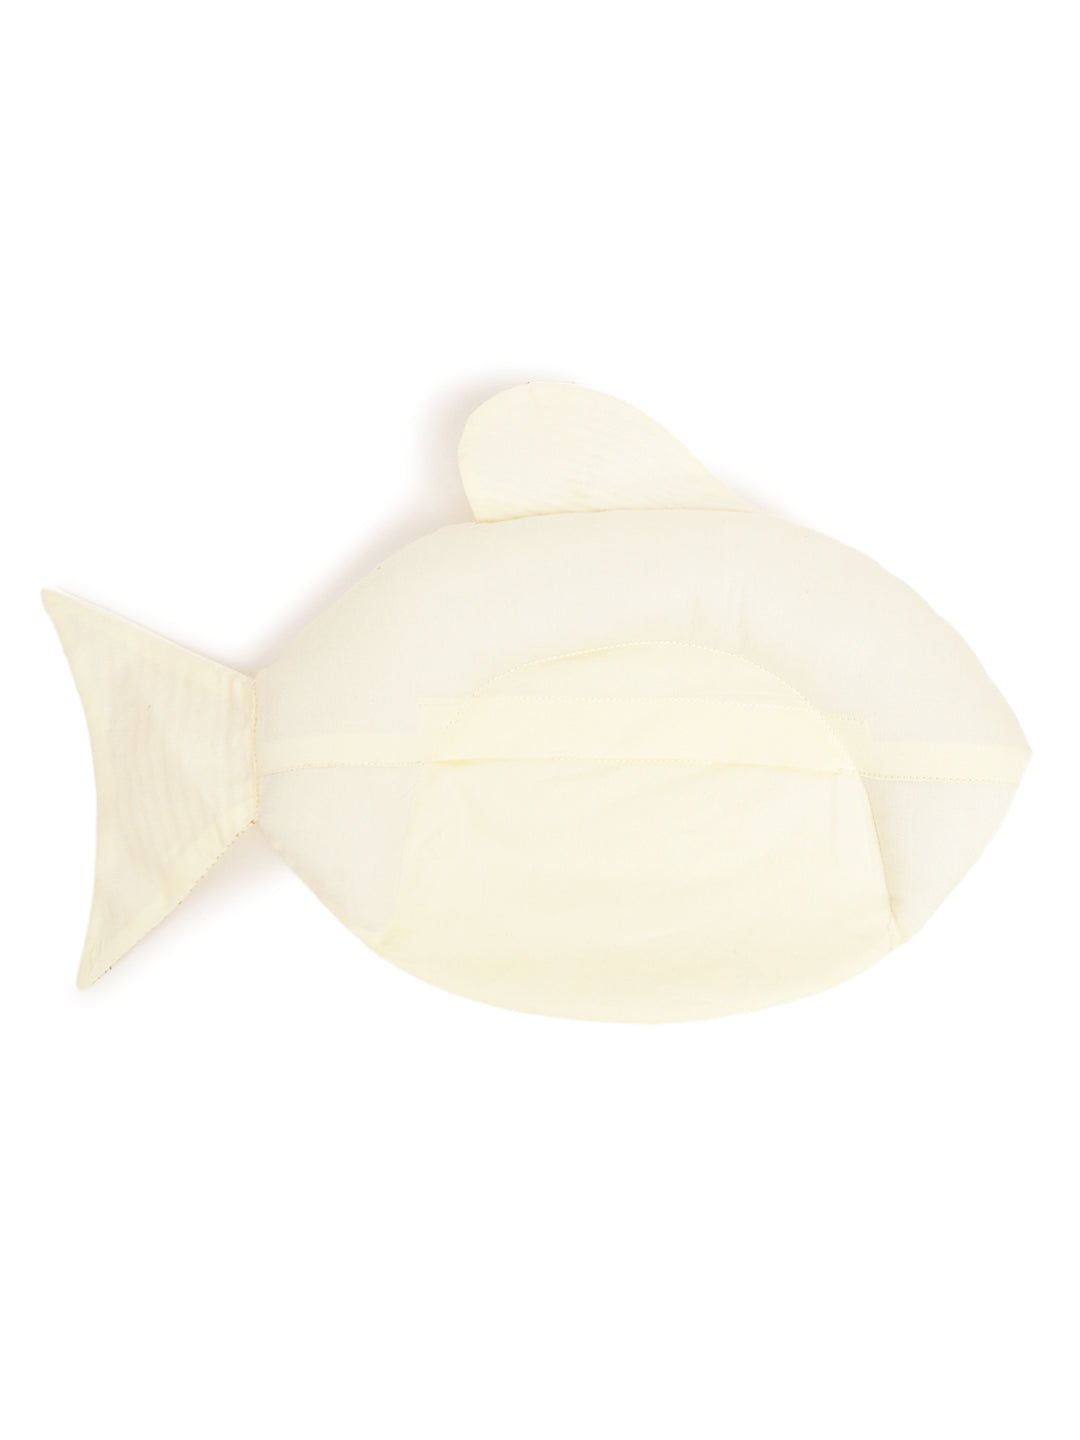 Shop Baby Fish Mustard Seed Pillow - Cream